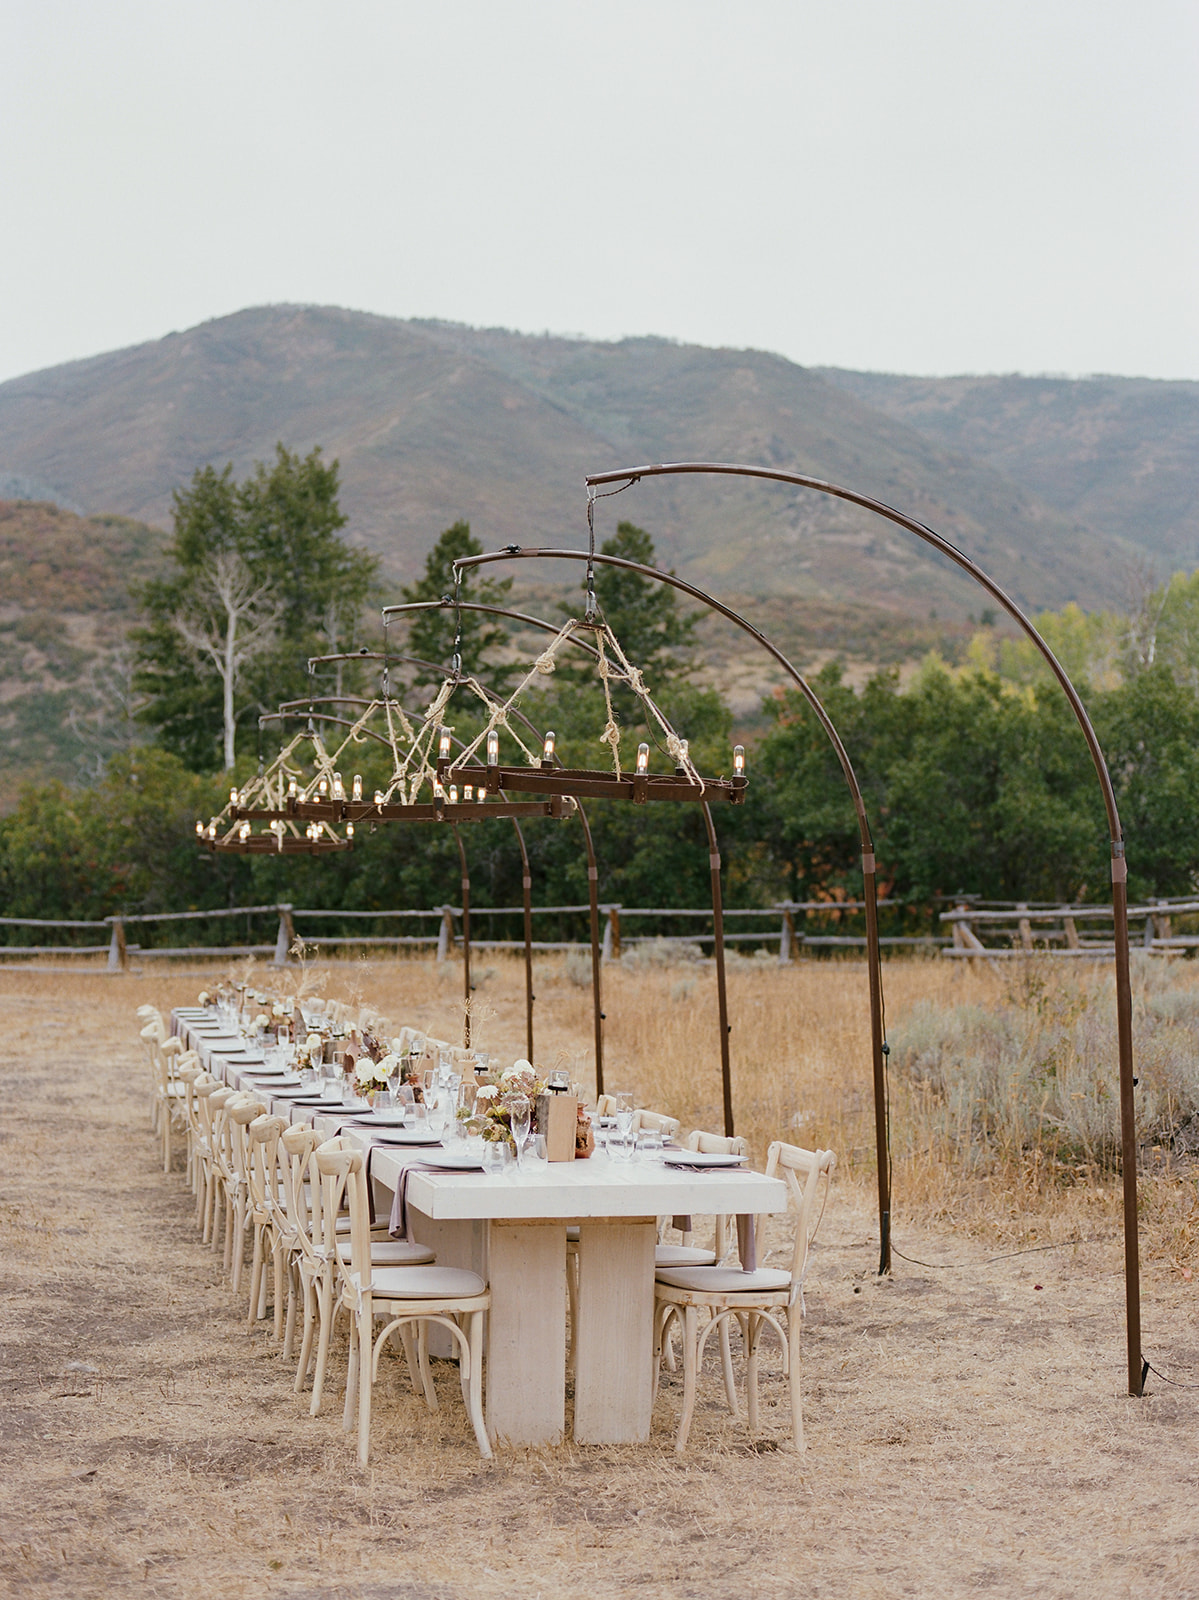 outdoor wedding reception setup a the Utah wedding venue The Lodge at Blue Sky 